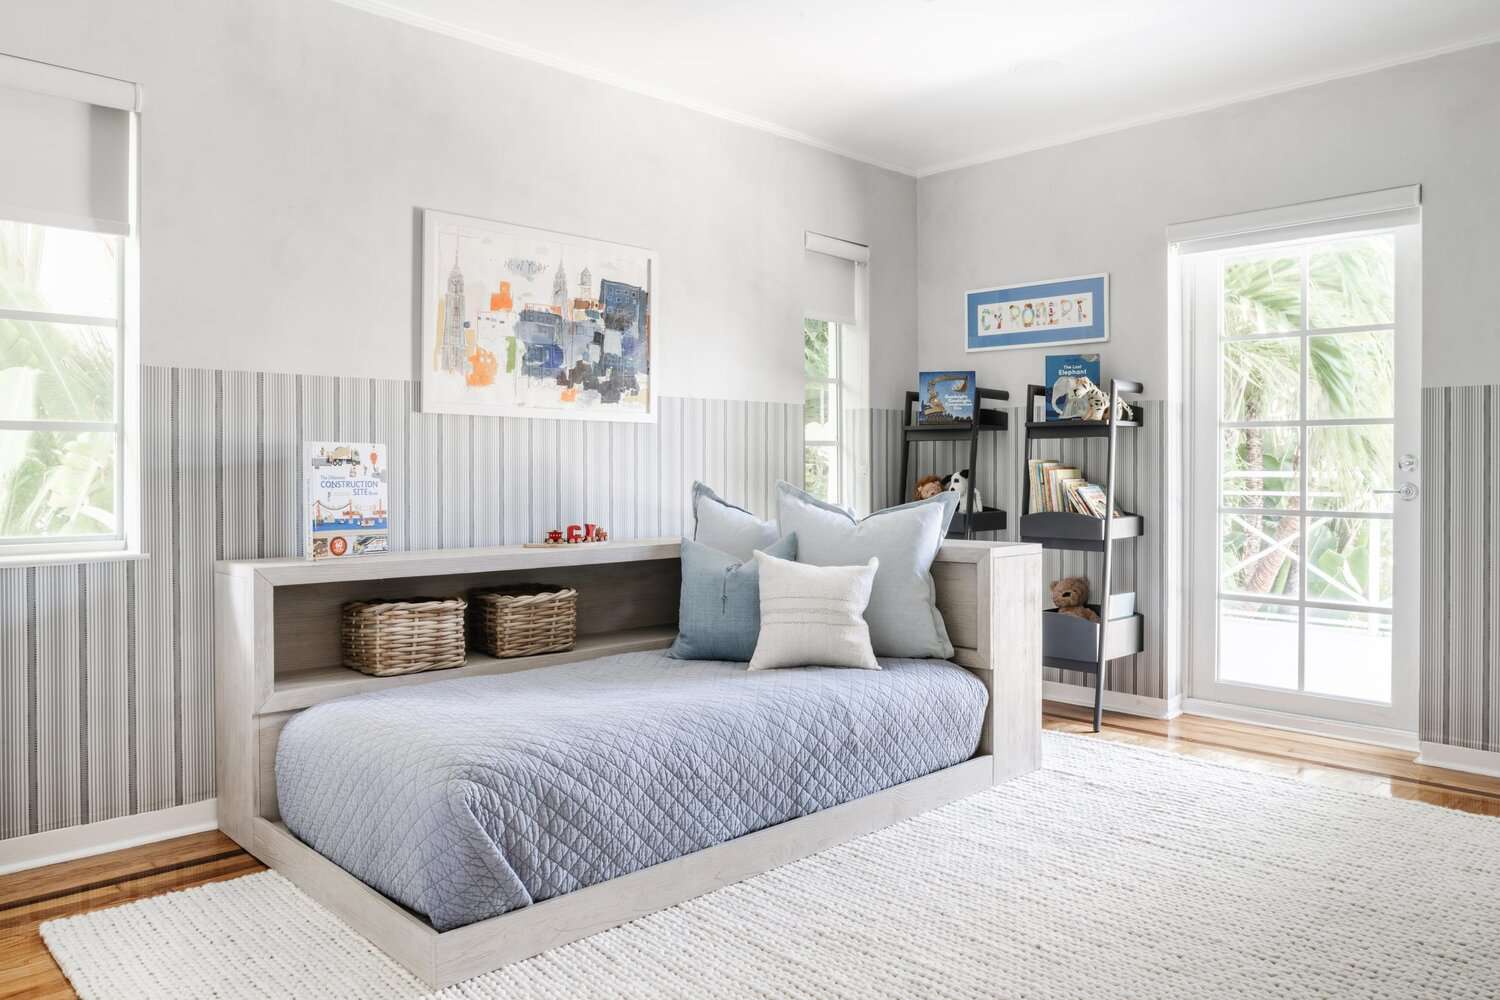 Dormitorio infantil gris con muebles azules 